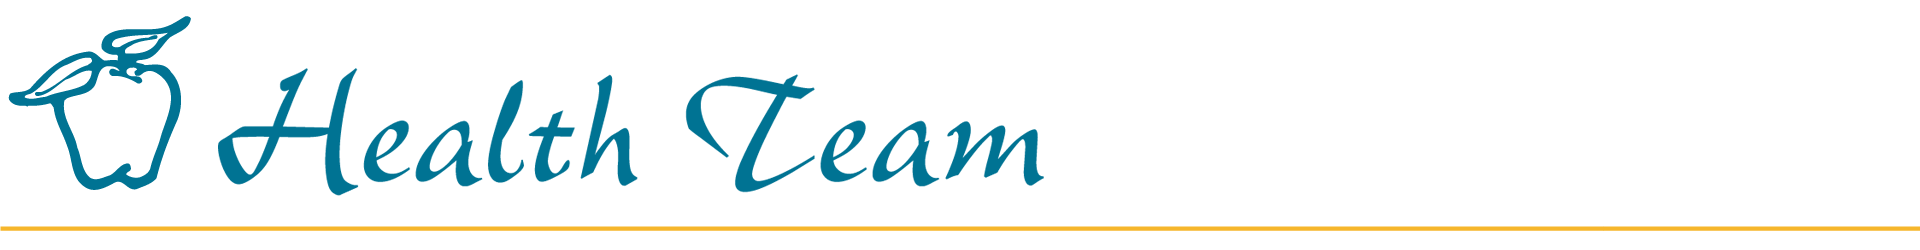 Heath Team Logo